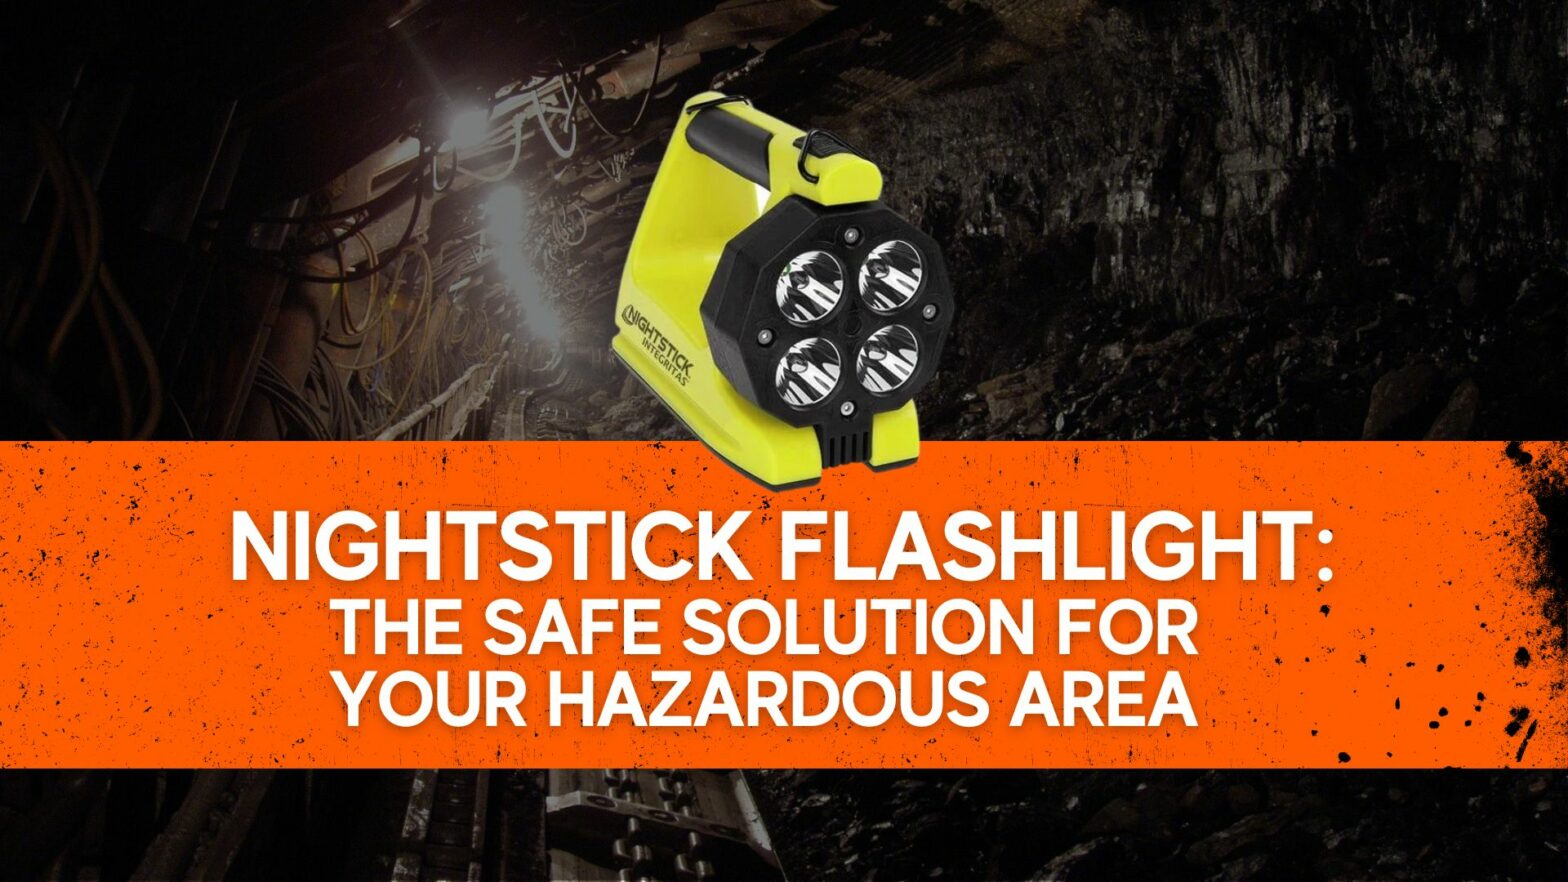 Nightstick Flashlight The safe solution for your hazardous area